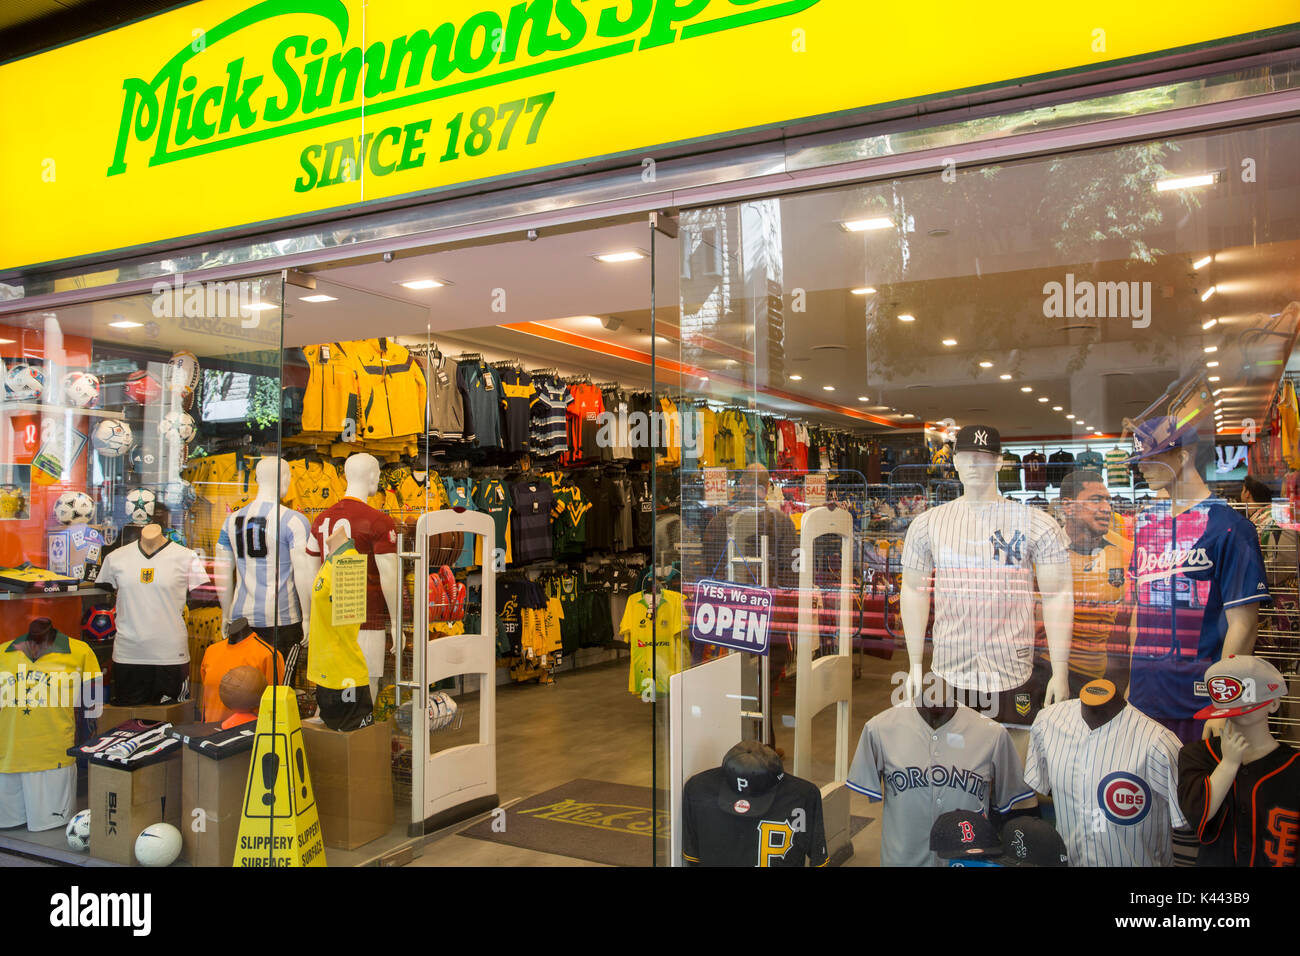 Mick Simmons sportswear clothing retailer in Sydney city centre,Australia  selling football kits, sport kit, balls Stock Photo - Alamy